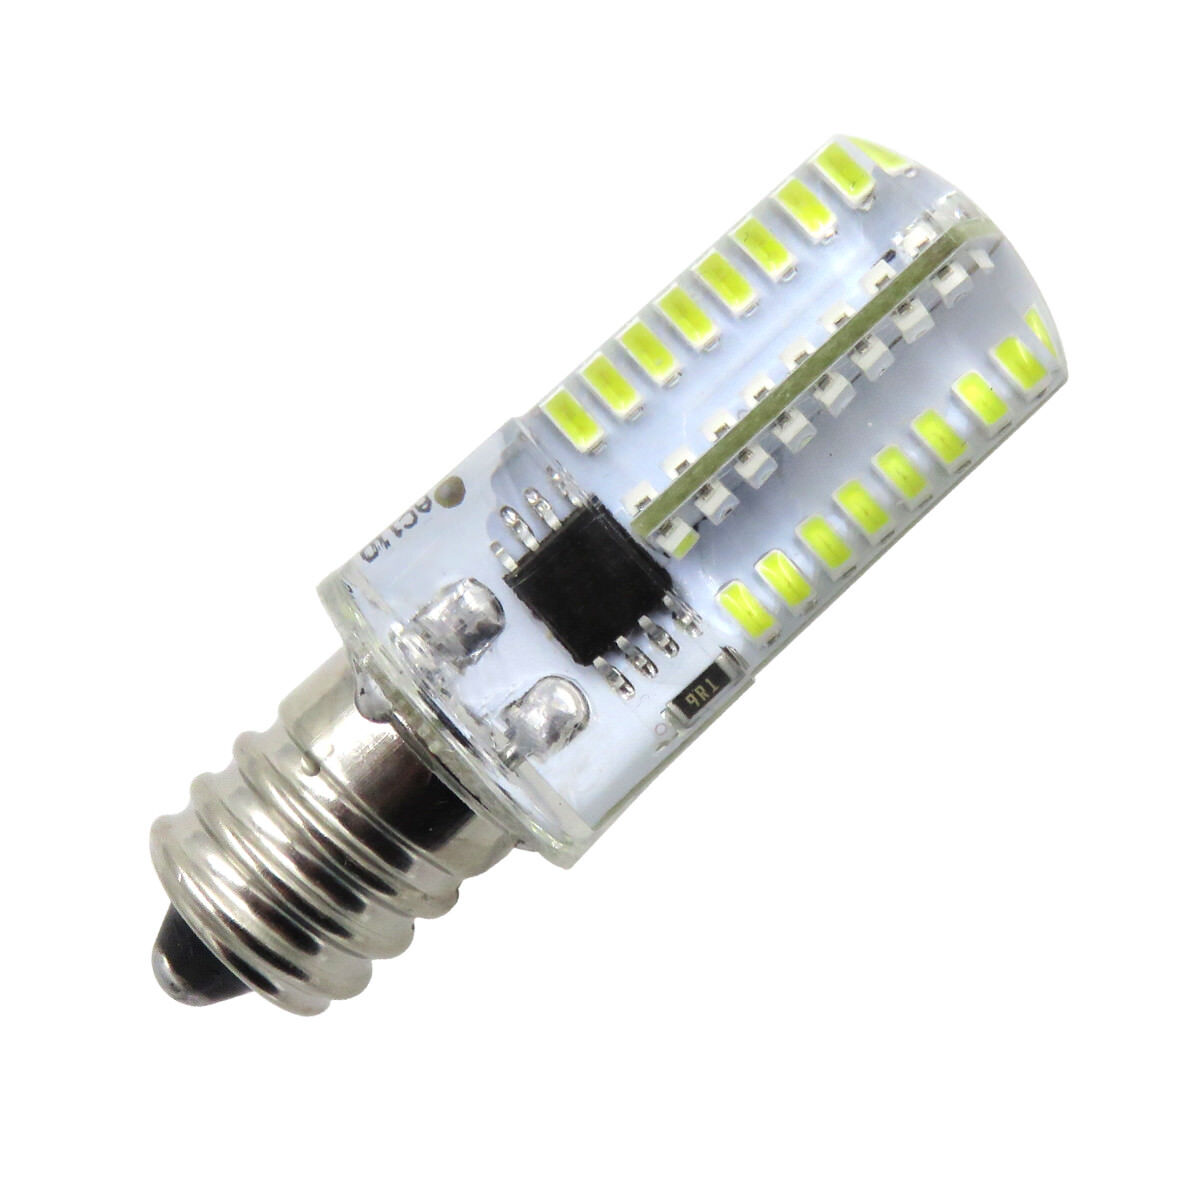 10pcs E12 Candelabra C7 64-3014 SMD LED Light Lamp Bulb Fit PQ1500S White 110V  Unbranded Does not apply - фотография #3